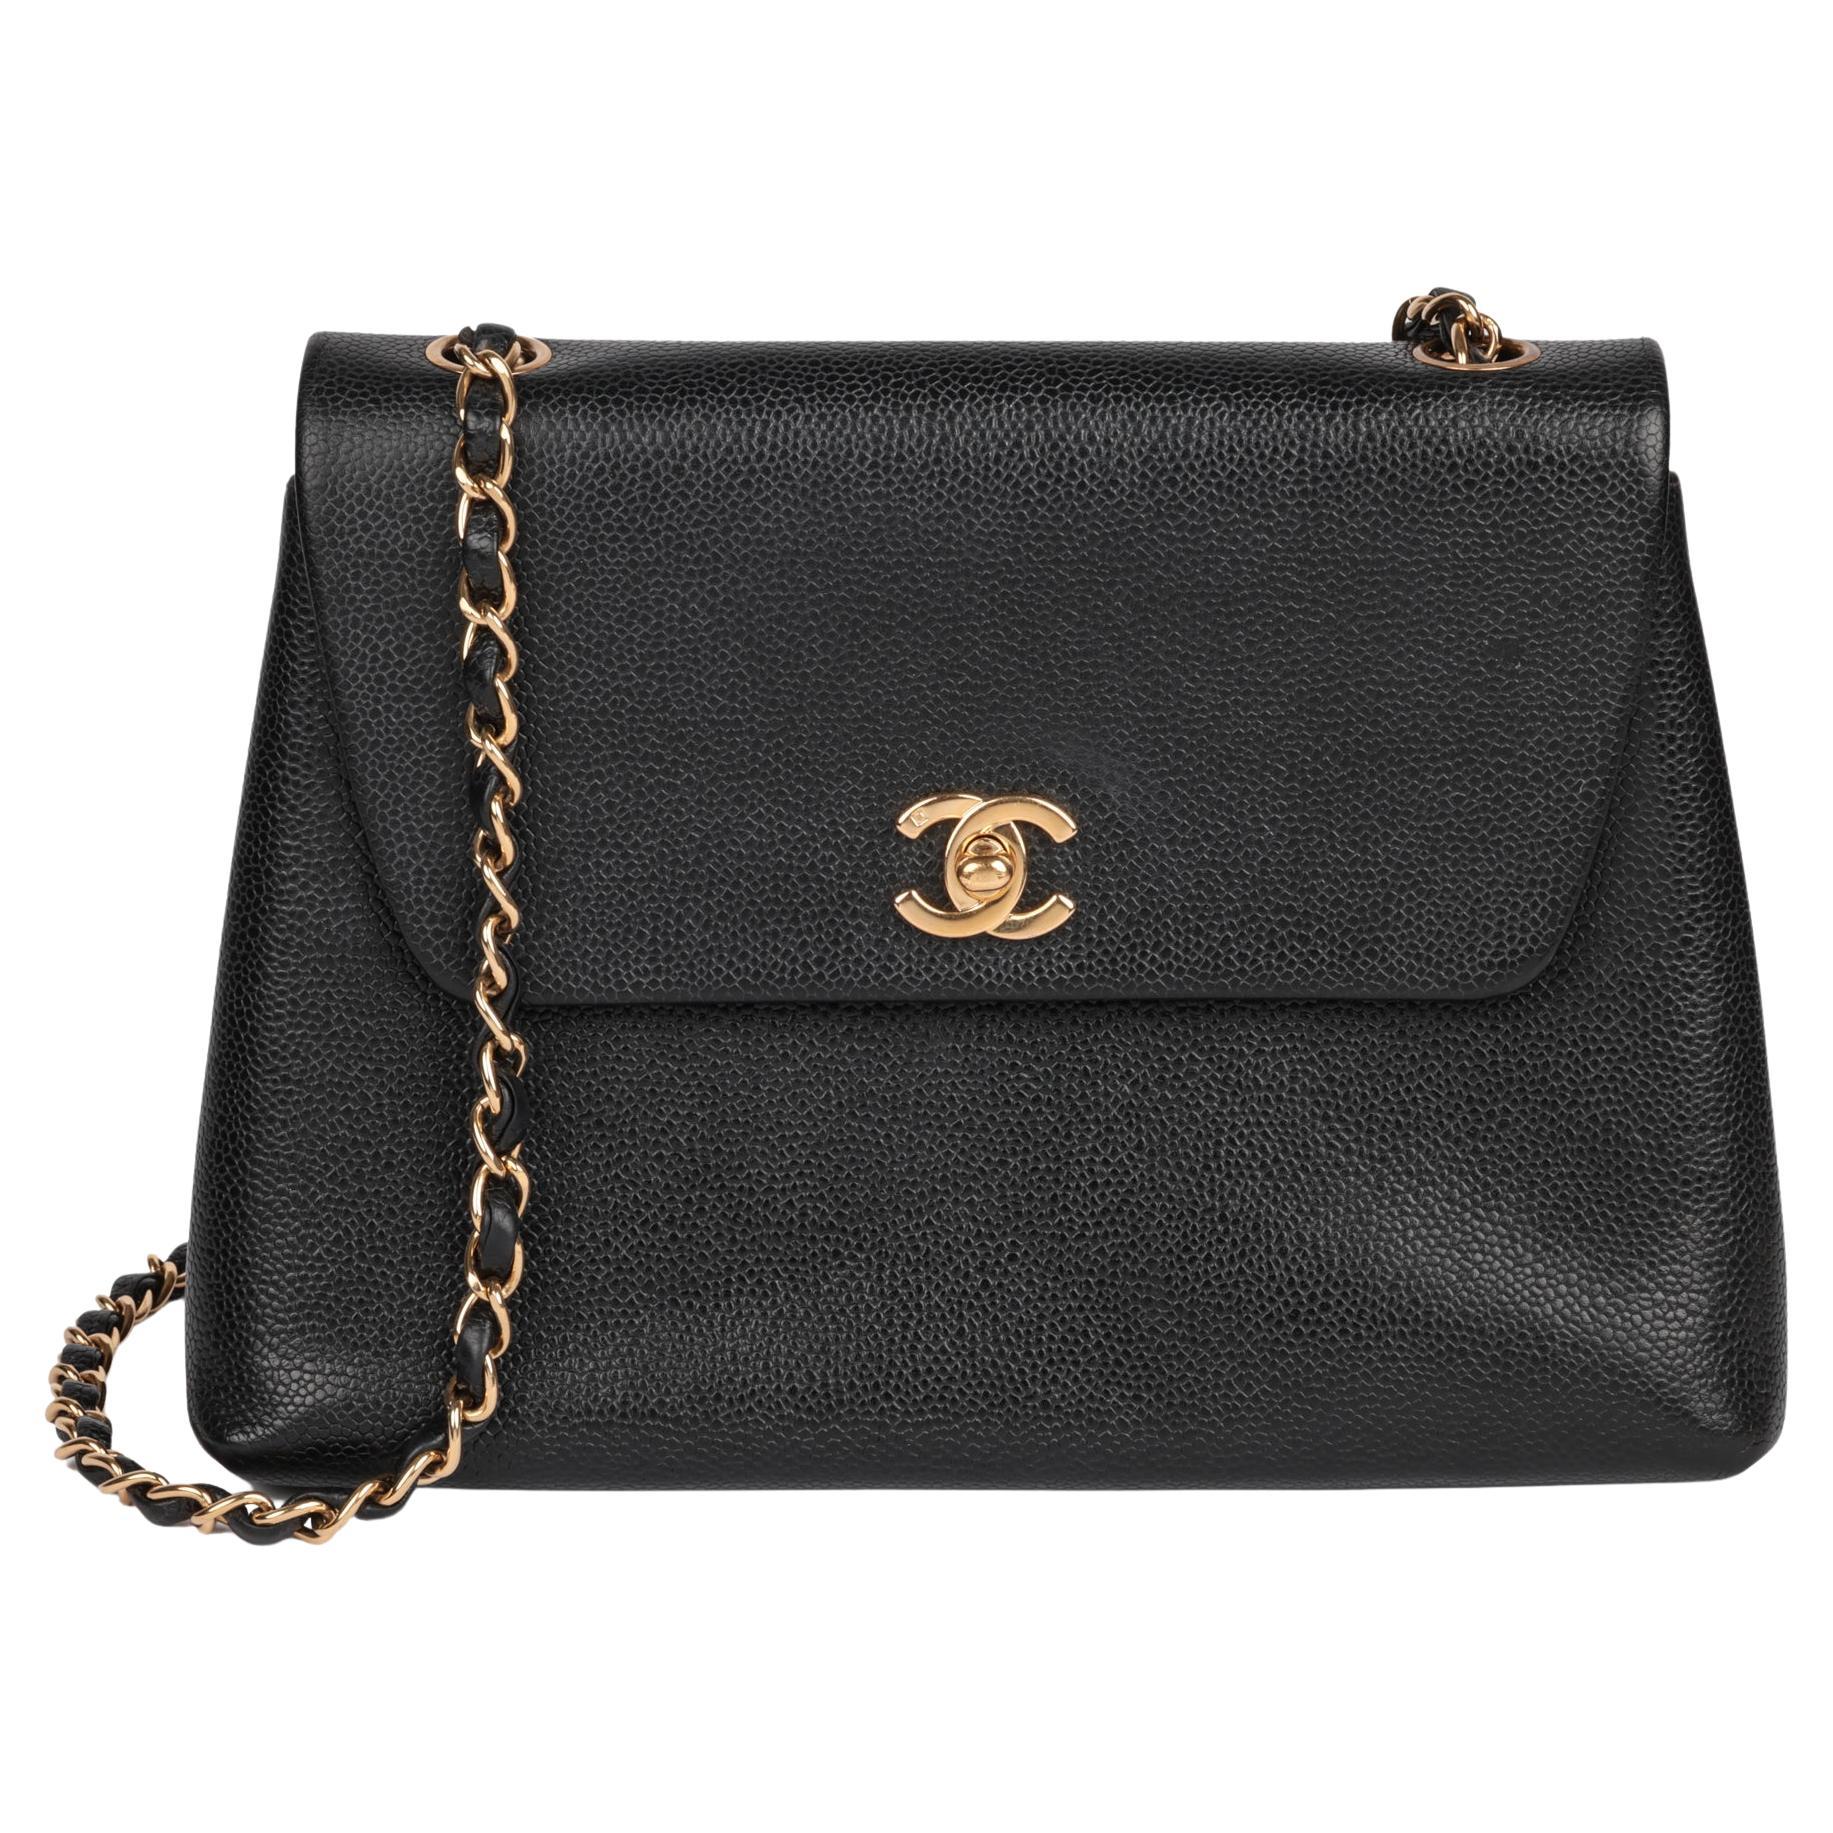 CHANEL Black Caviar Leather Vintage Medium Classic Single Flap Bag For Sale